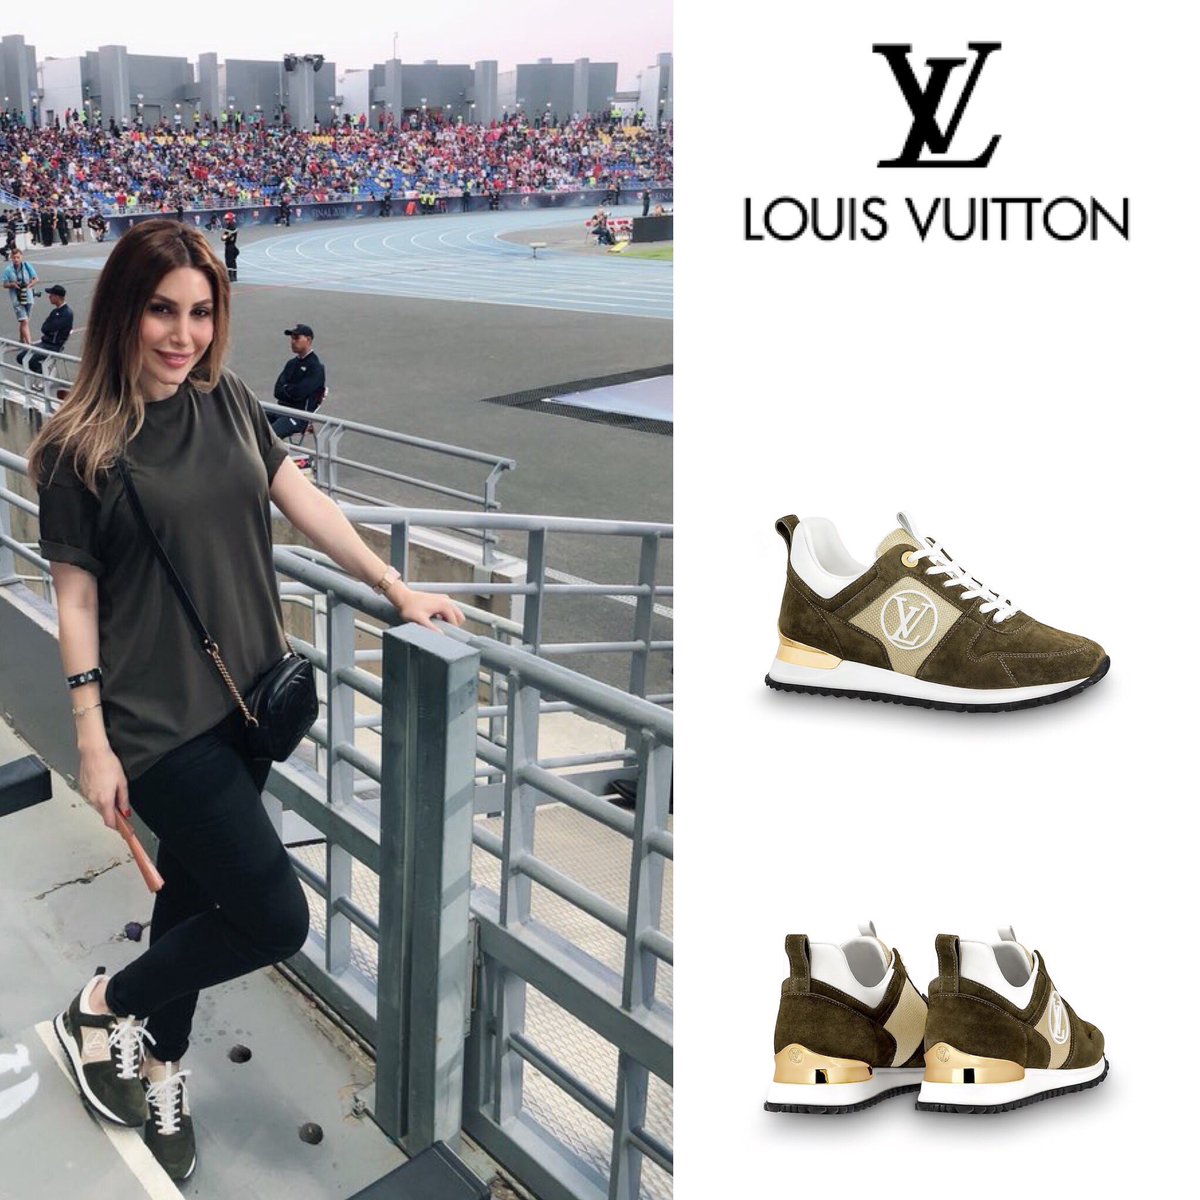 LOUIS VUITTON RUN AWAY SNEAKER - shoes lovers